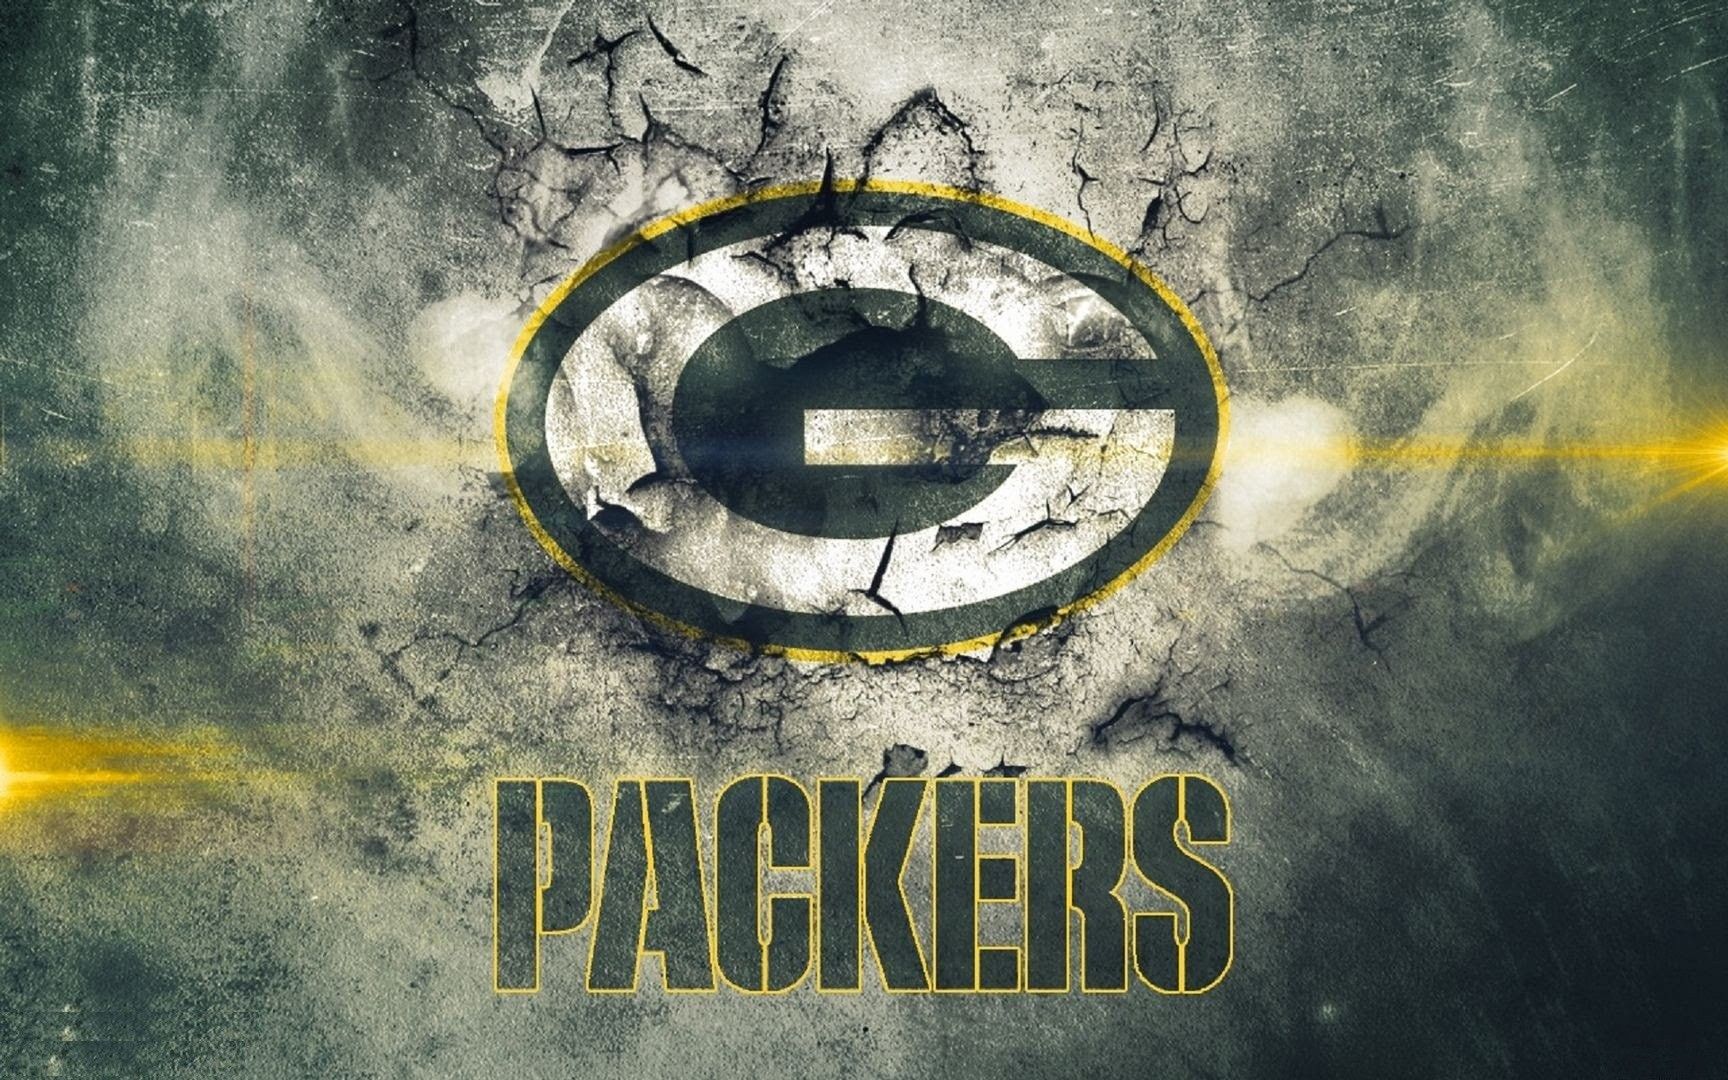 Green Bay Packers Wallpaper HD Live